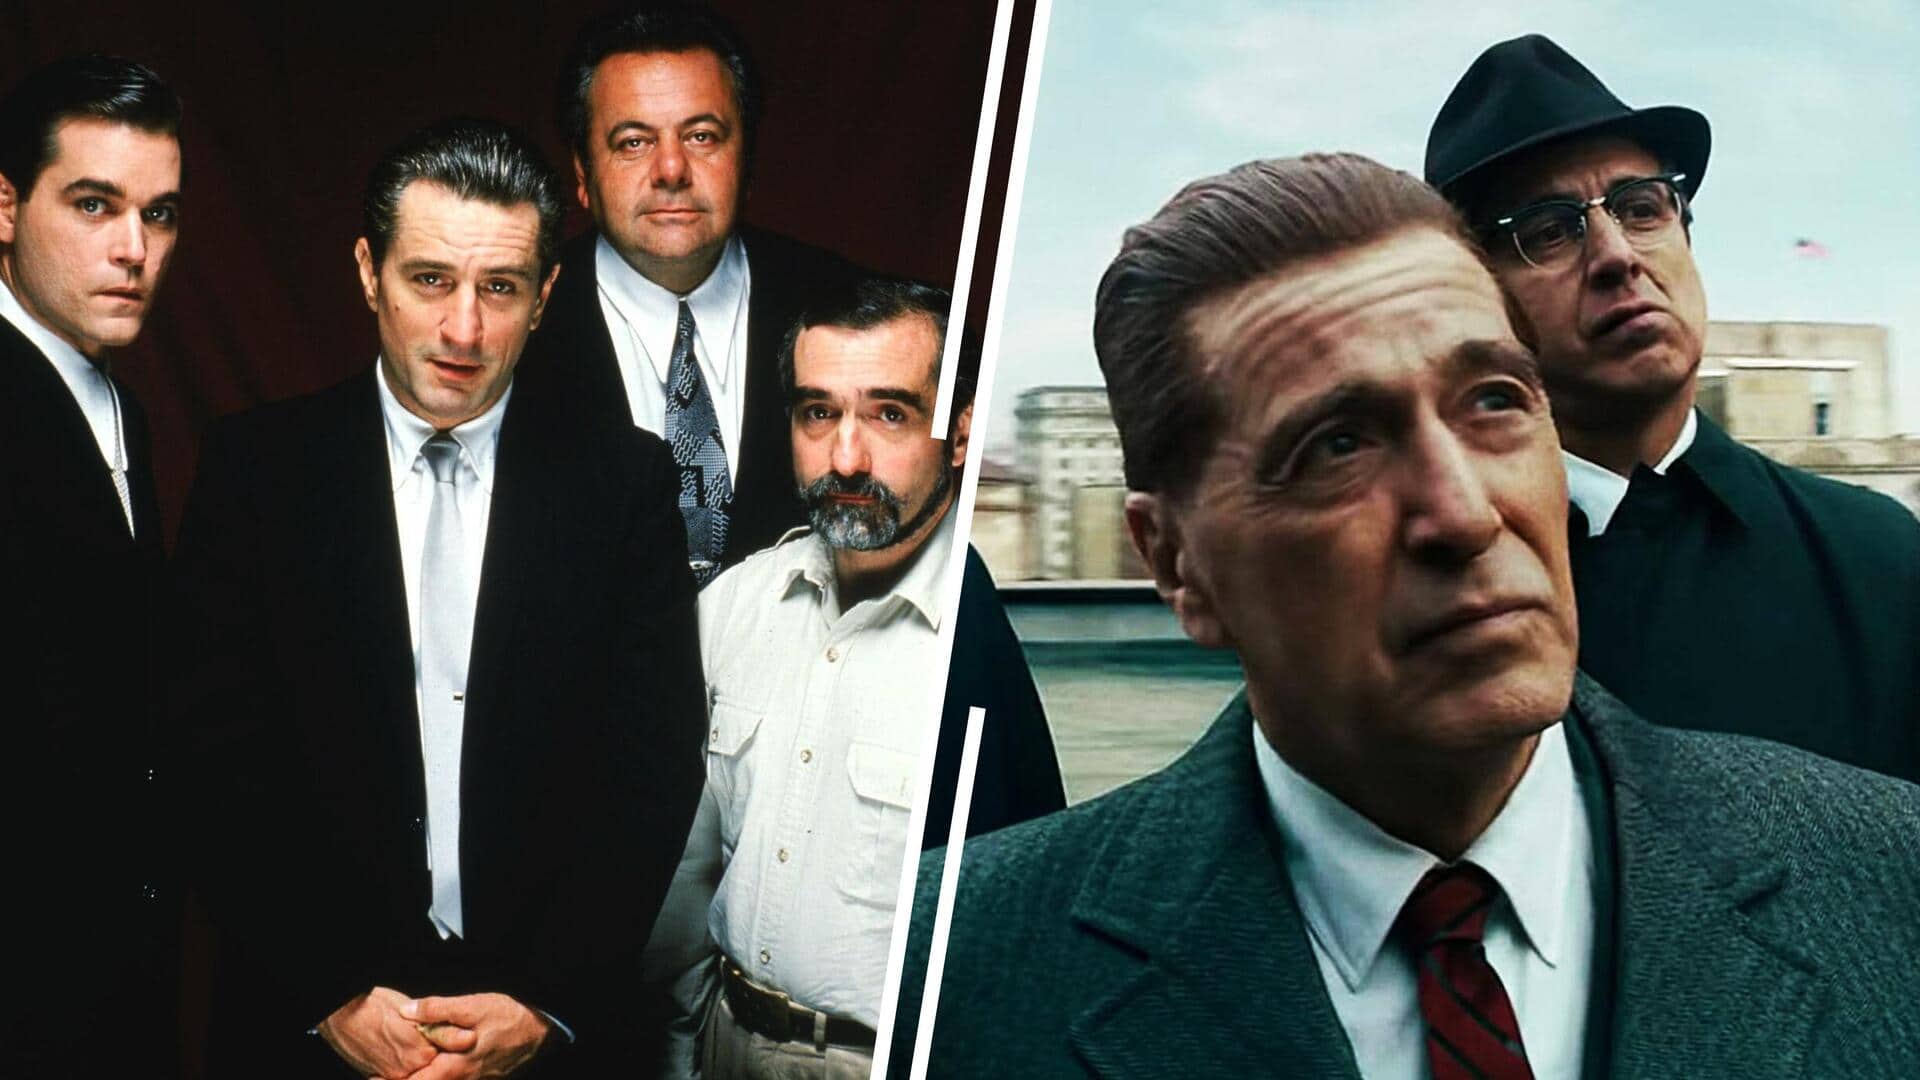 'Goodfellas' to 'The Irishman': Hollywood movies on real-life mafia